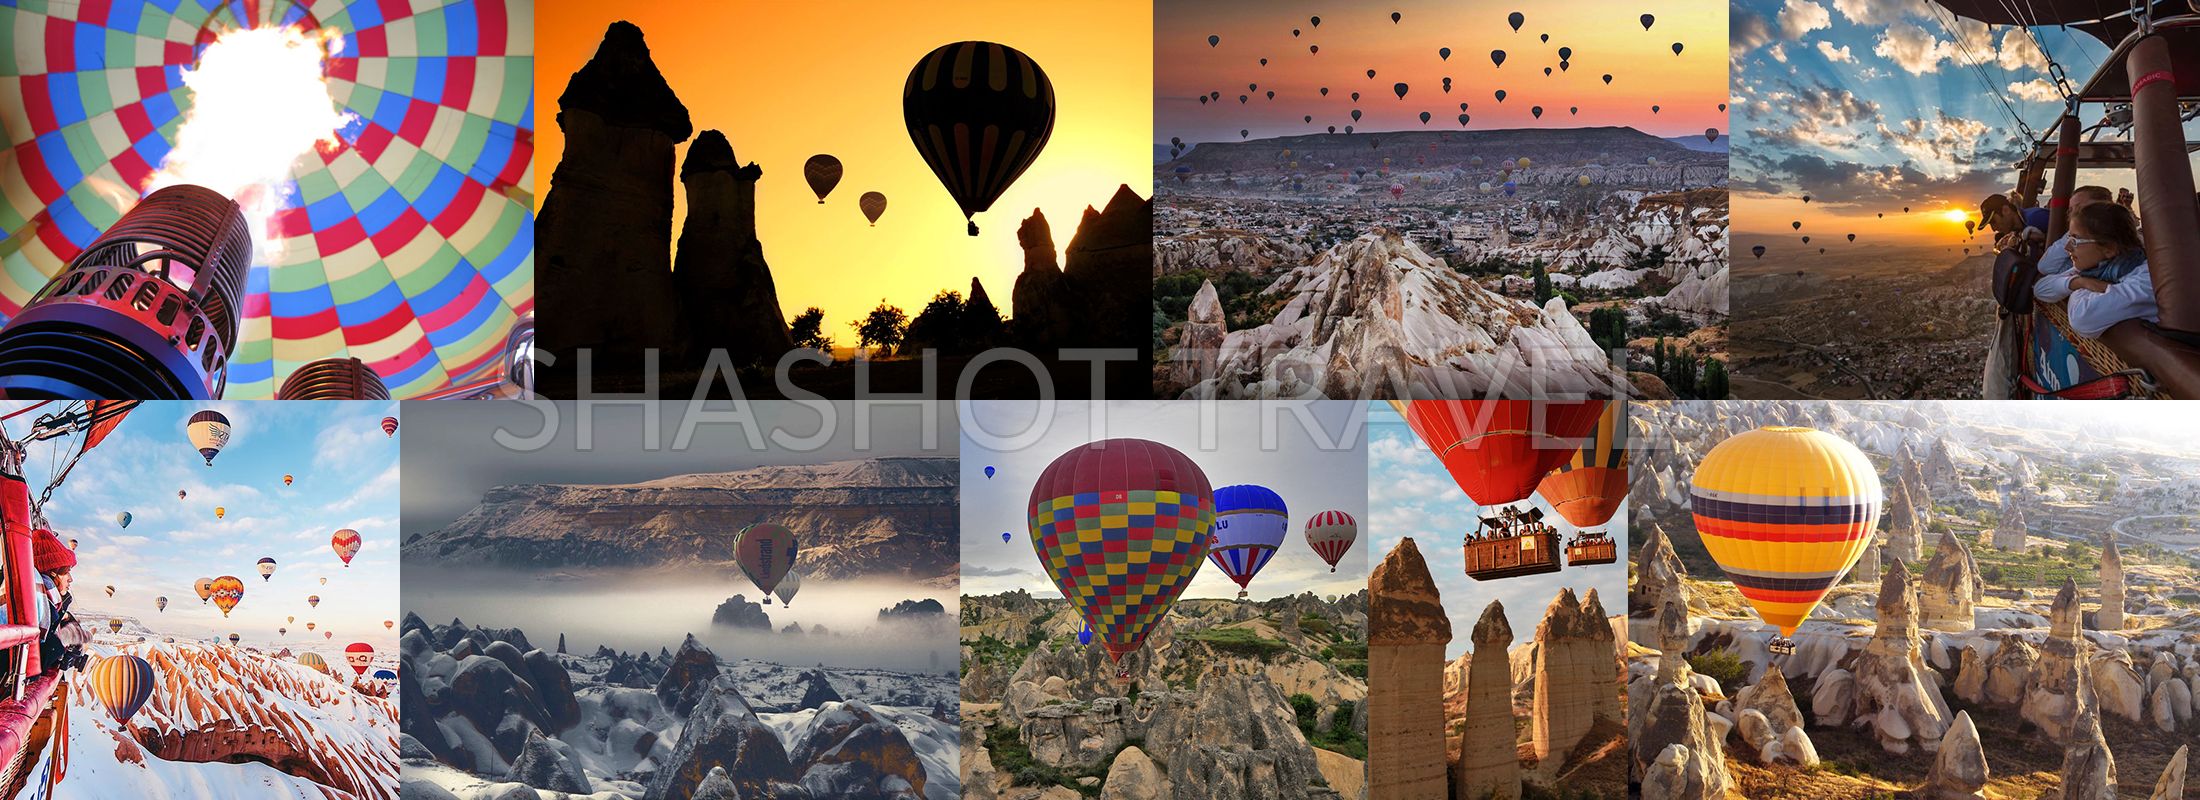 cappadocia-balloon-tour-turkey-1